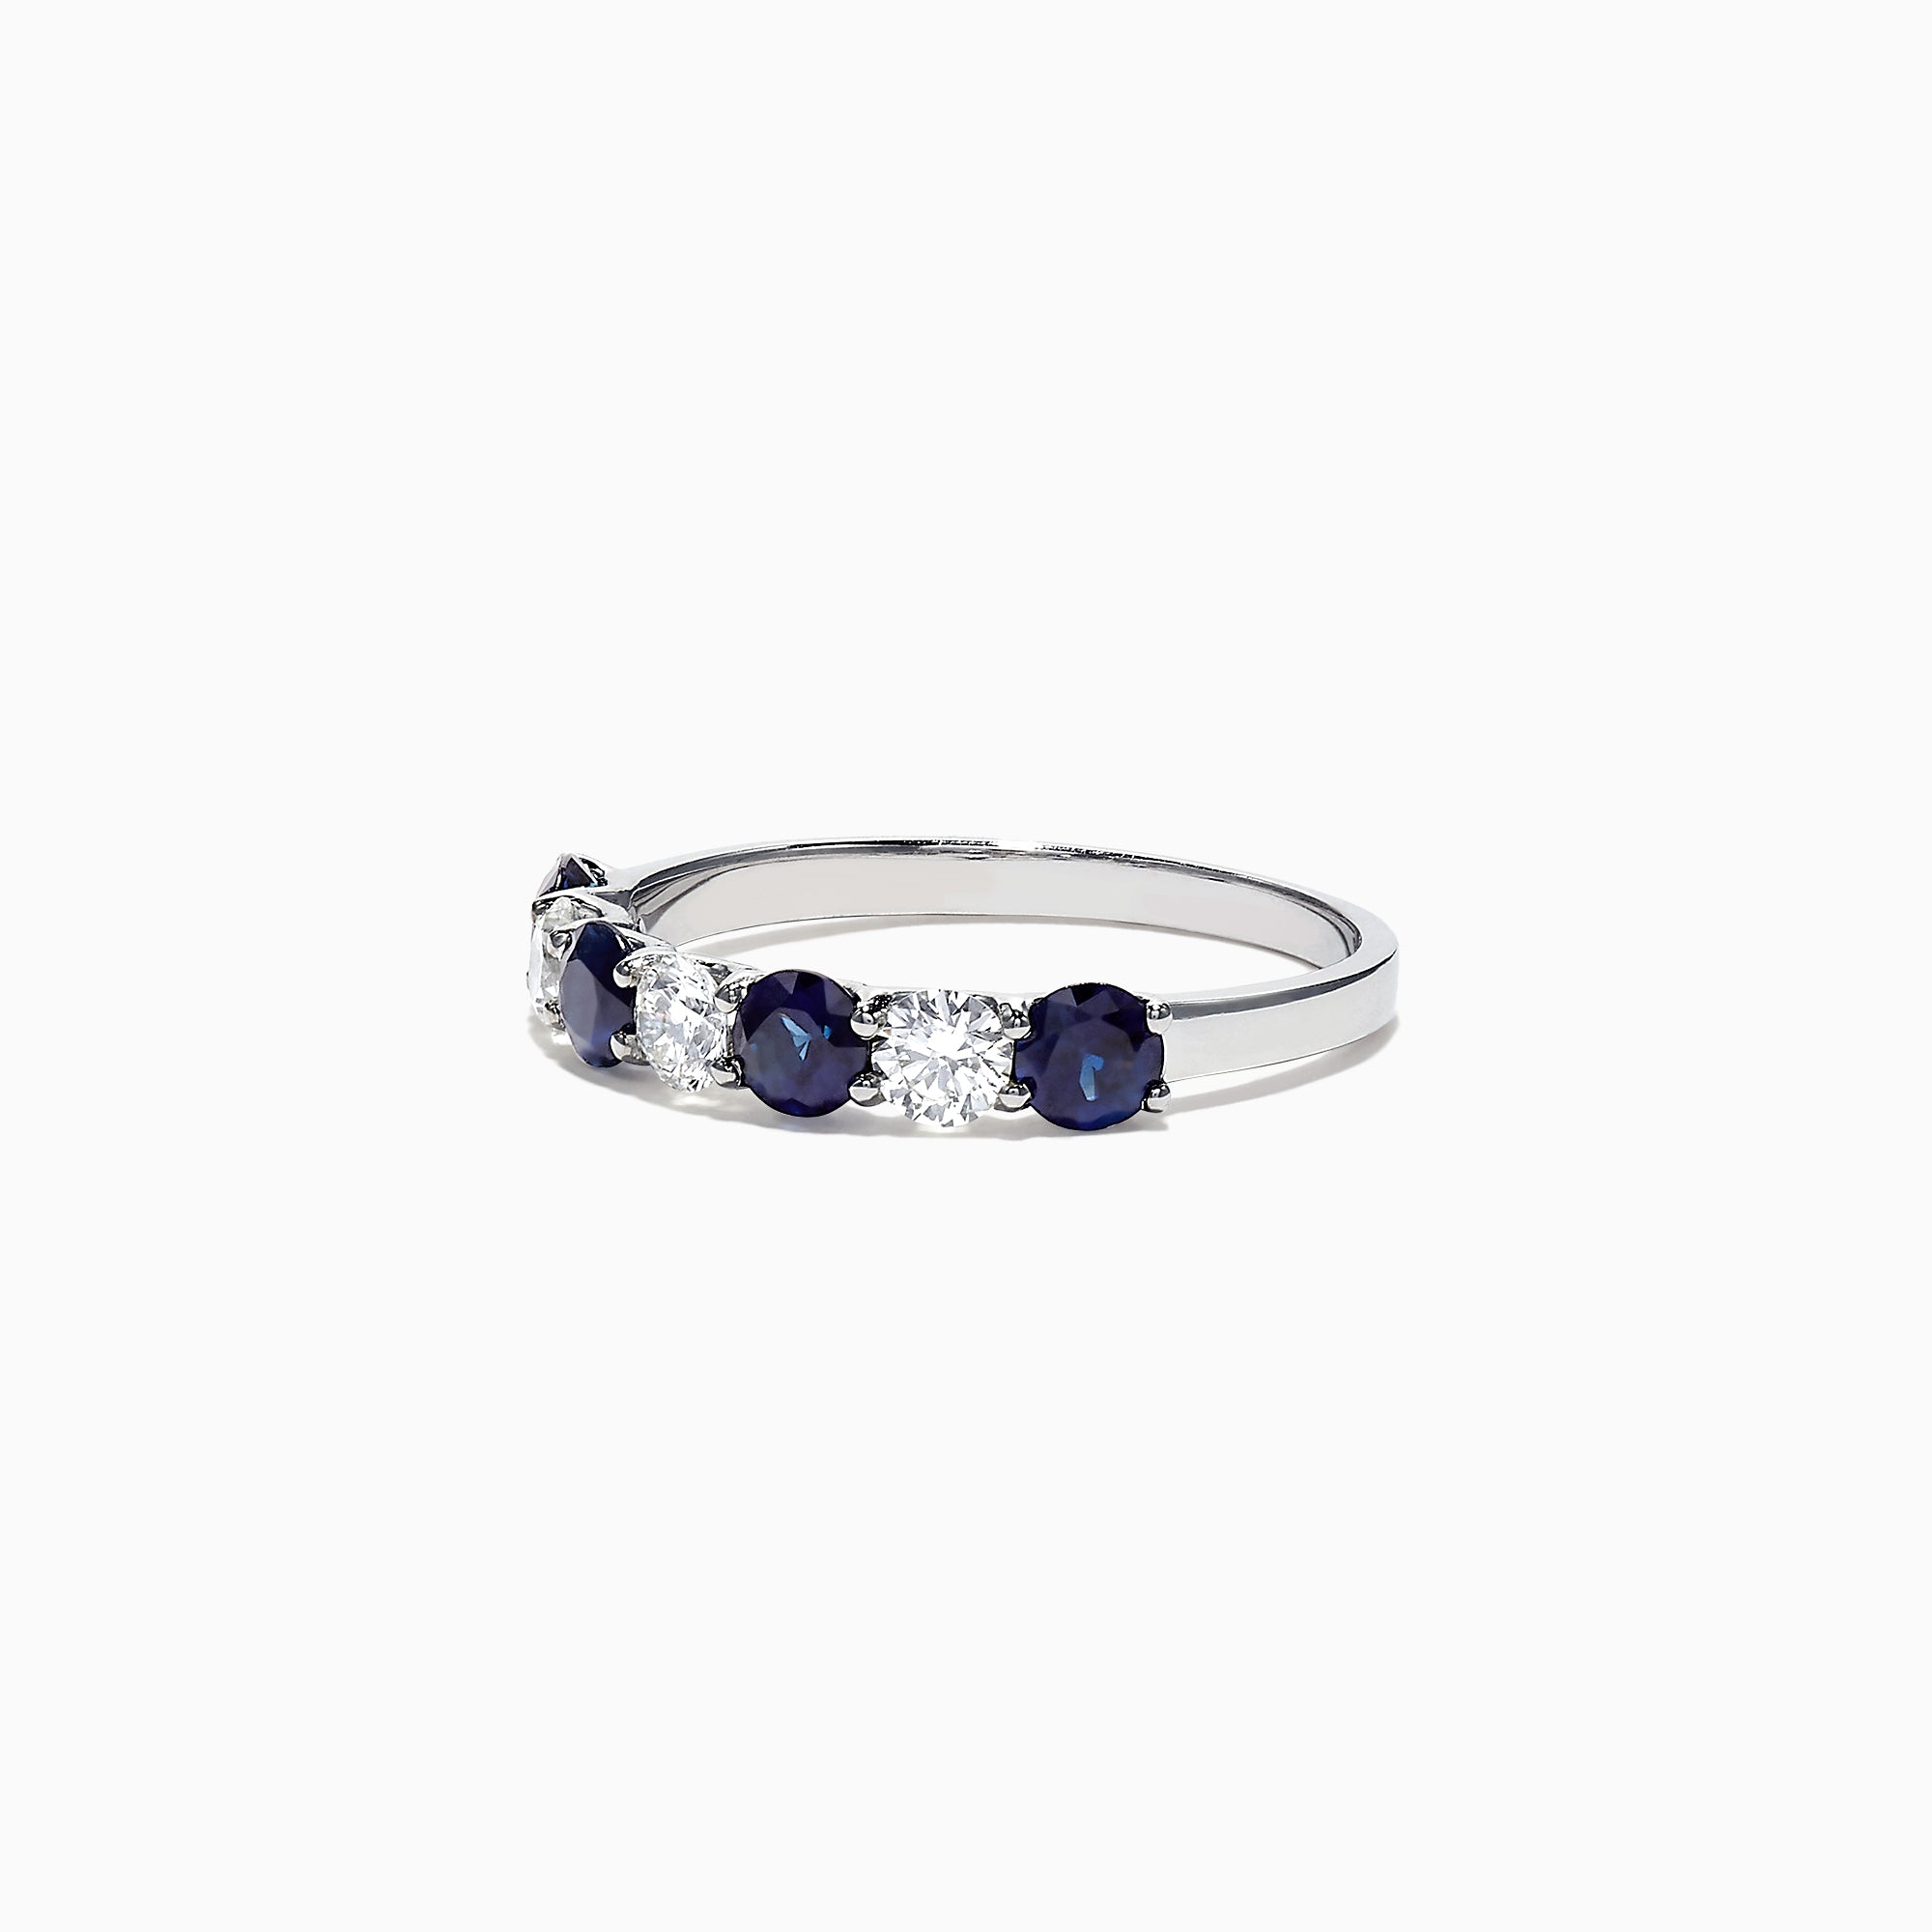 Effy Royale Bleu 14K White Gold Sapphire and Diamond Ring, 1.39 TCW